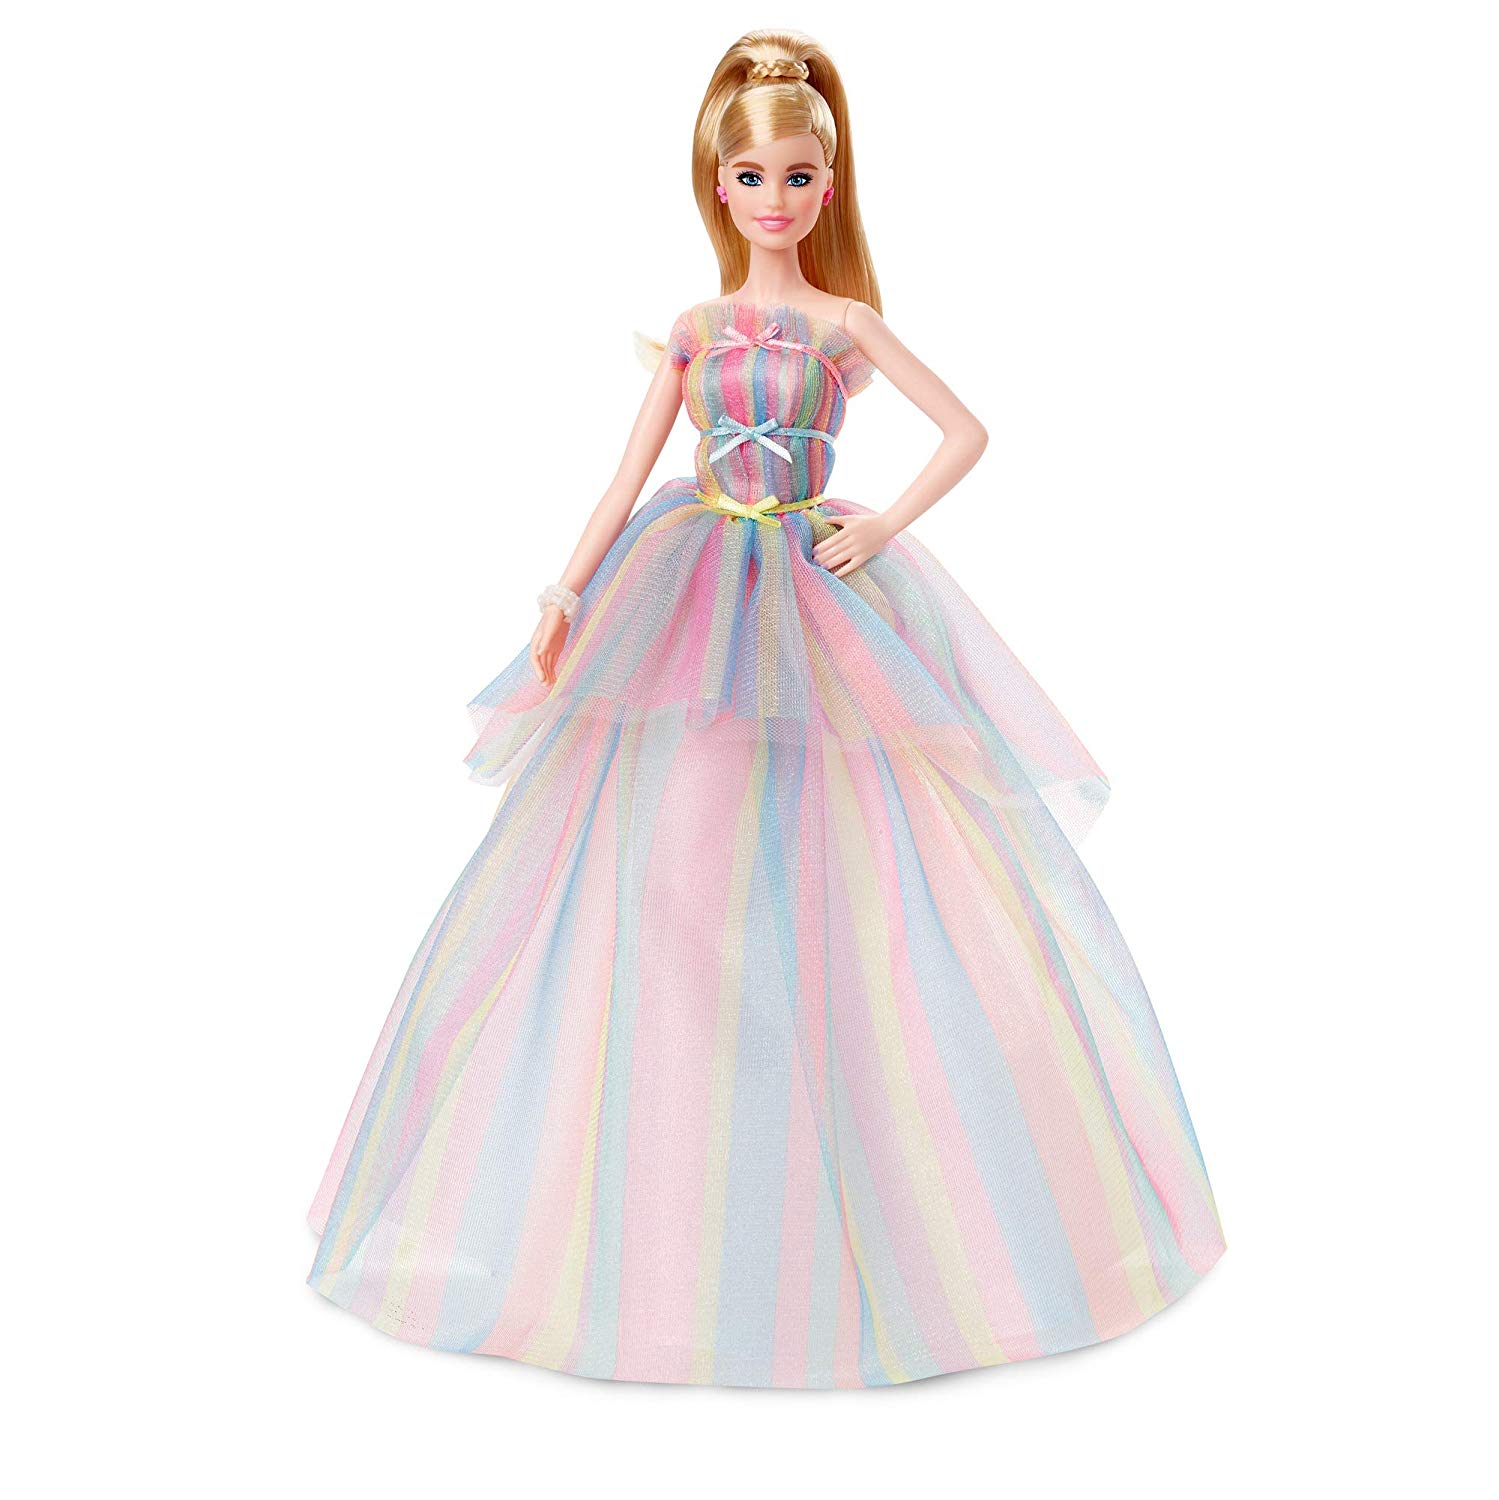 Barbie Collector Dolls 2020 | tyello.com